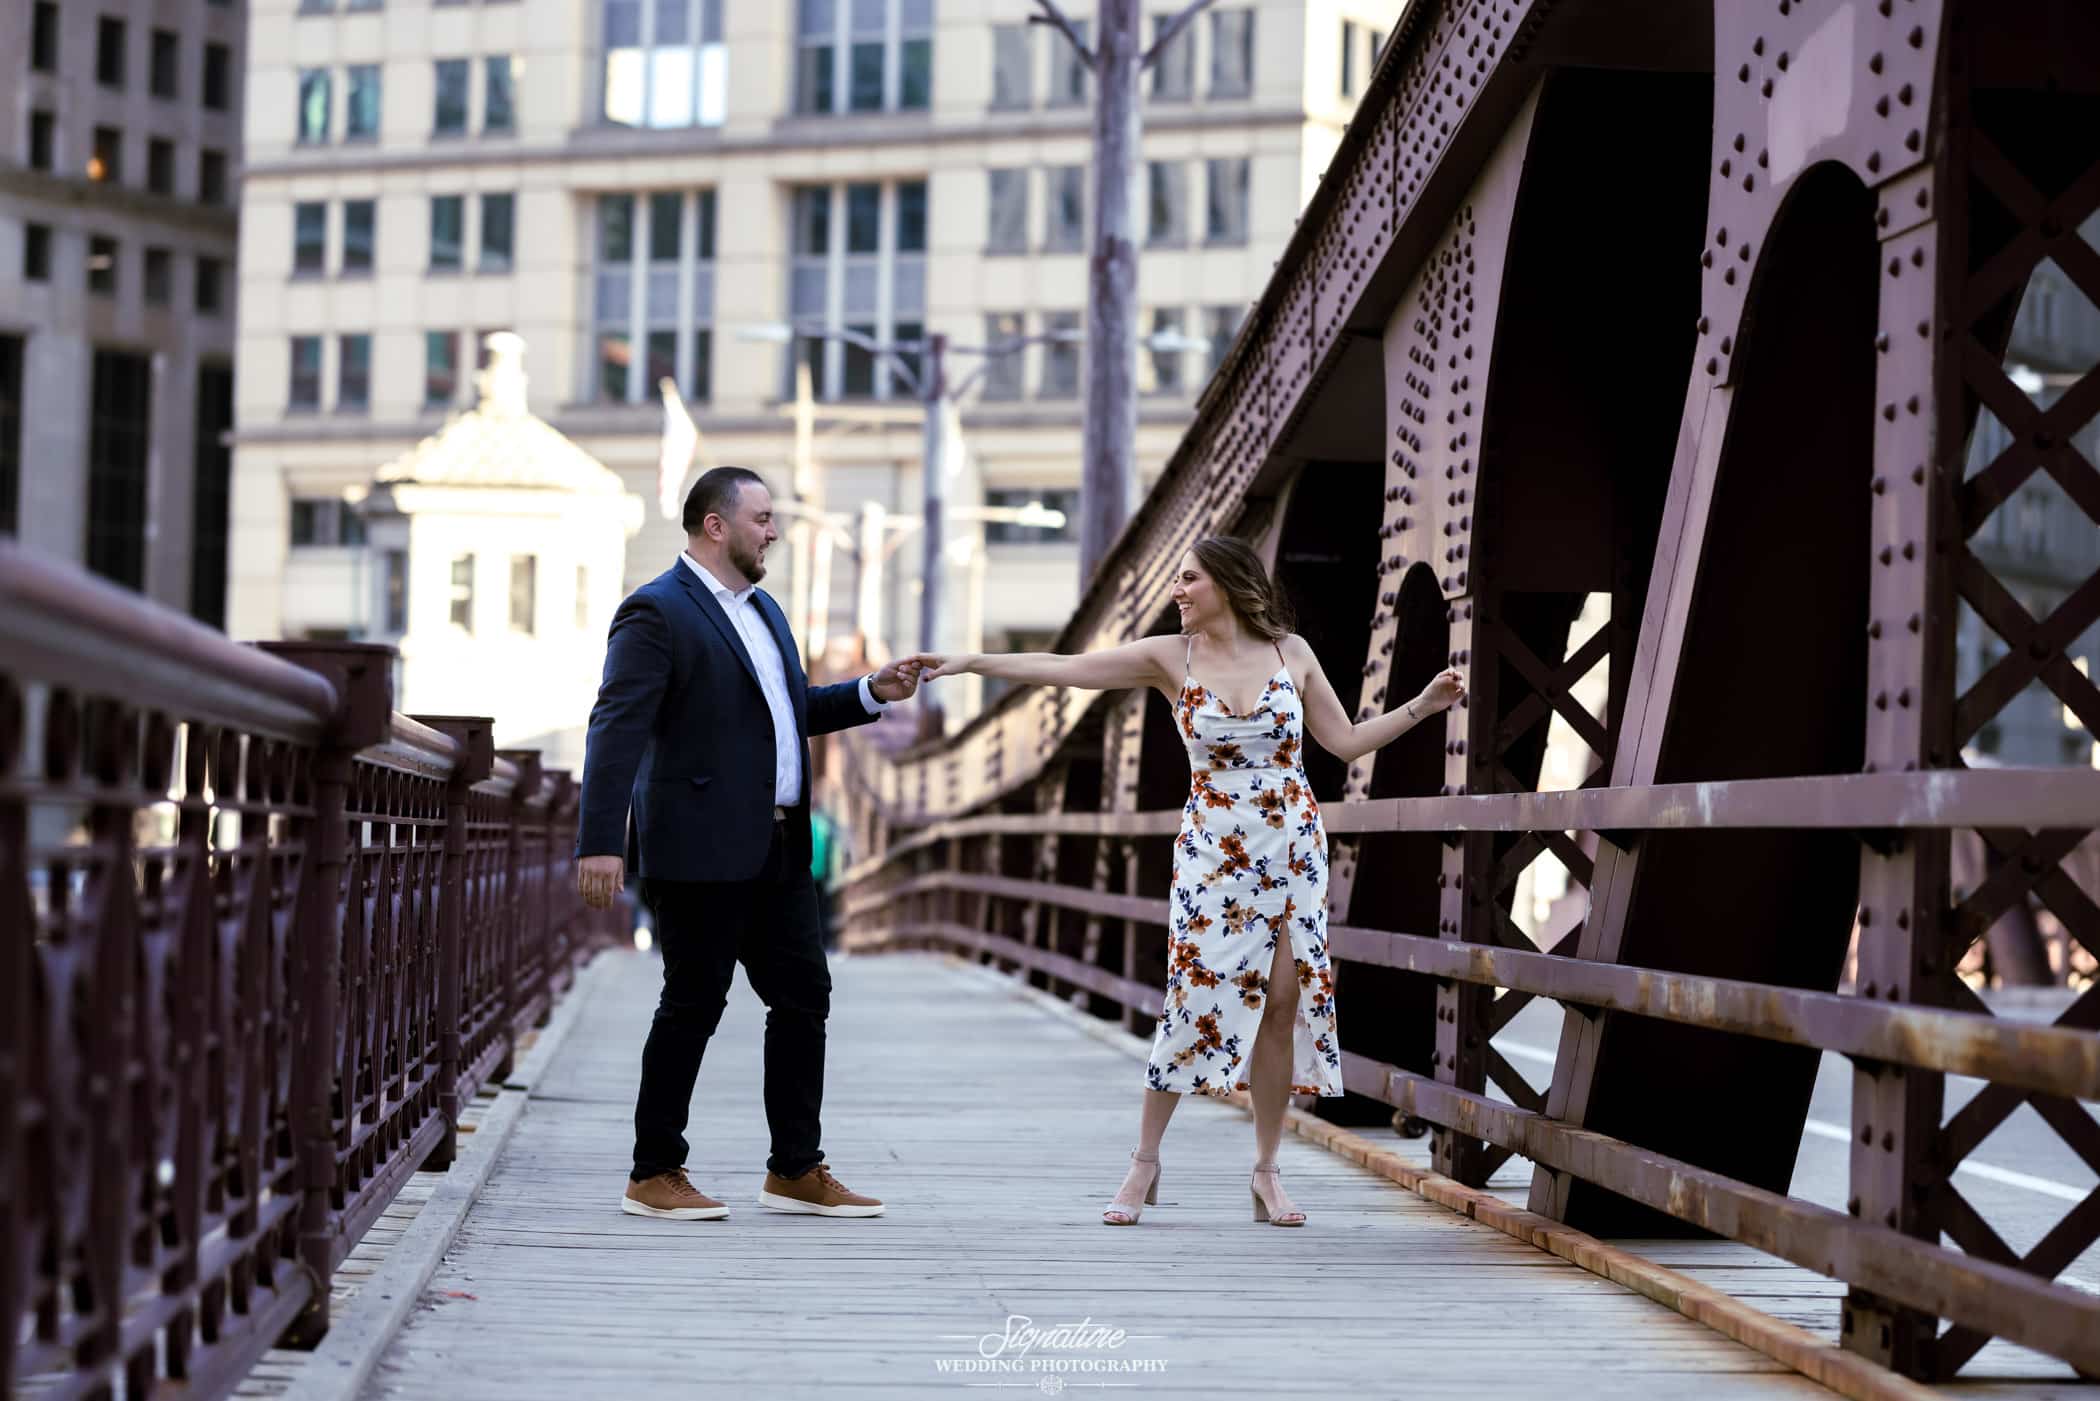 Couple in dance pose on bridge